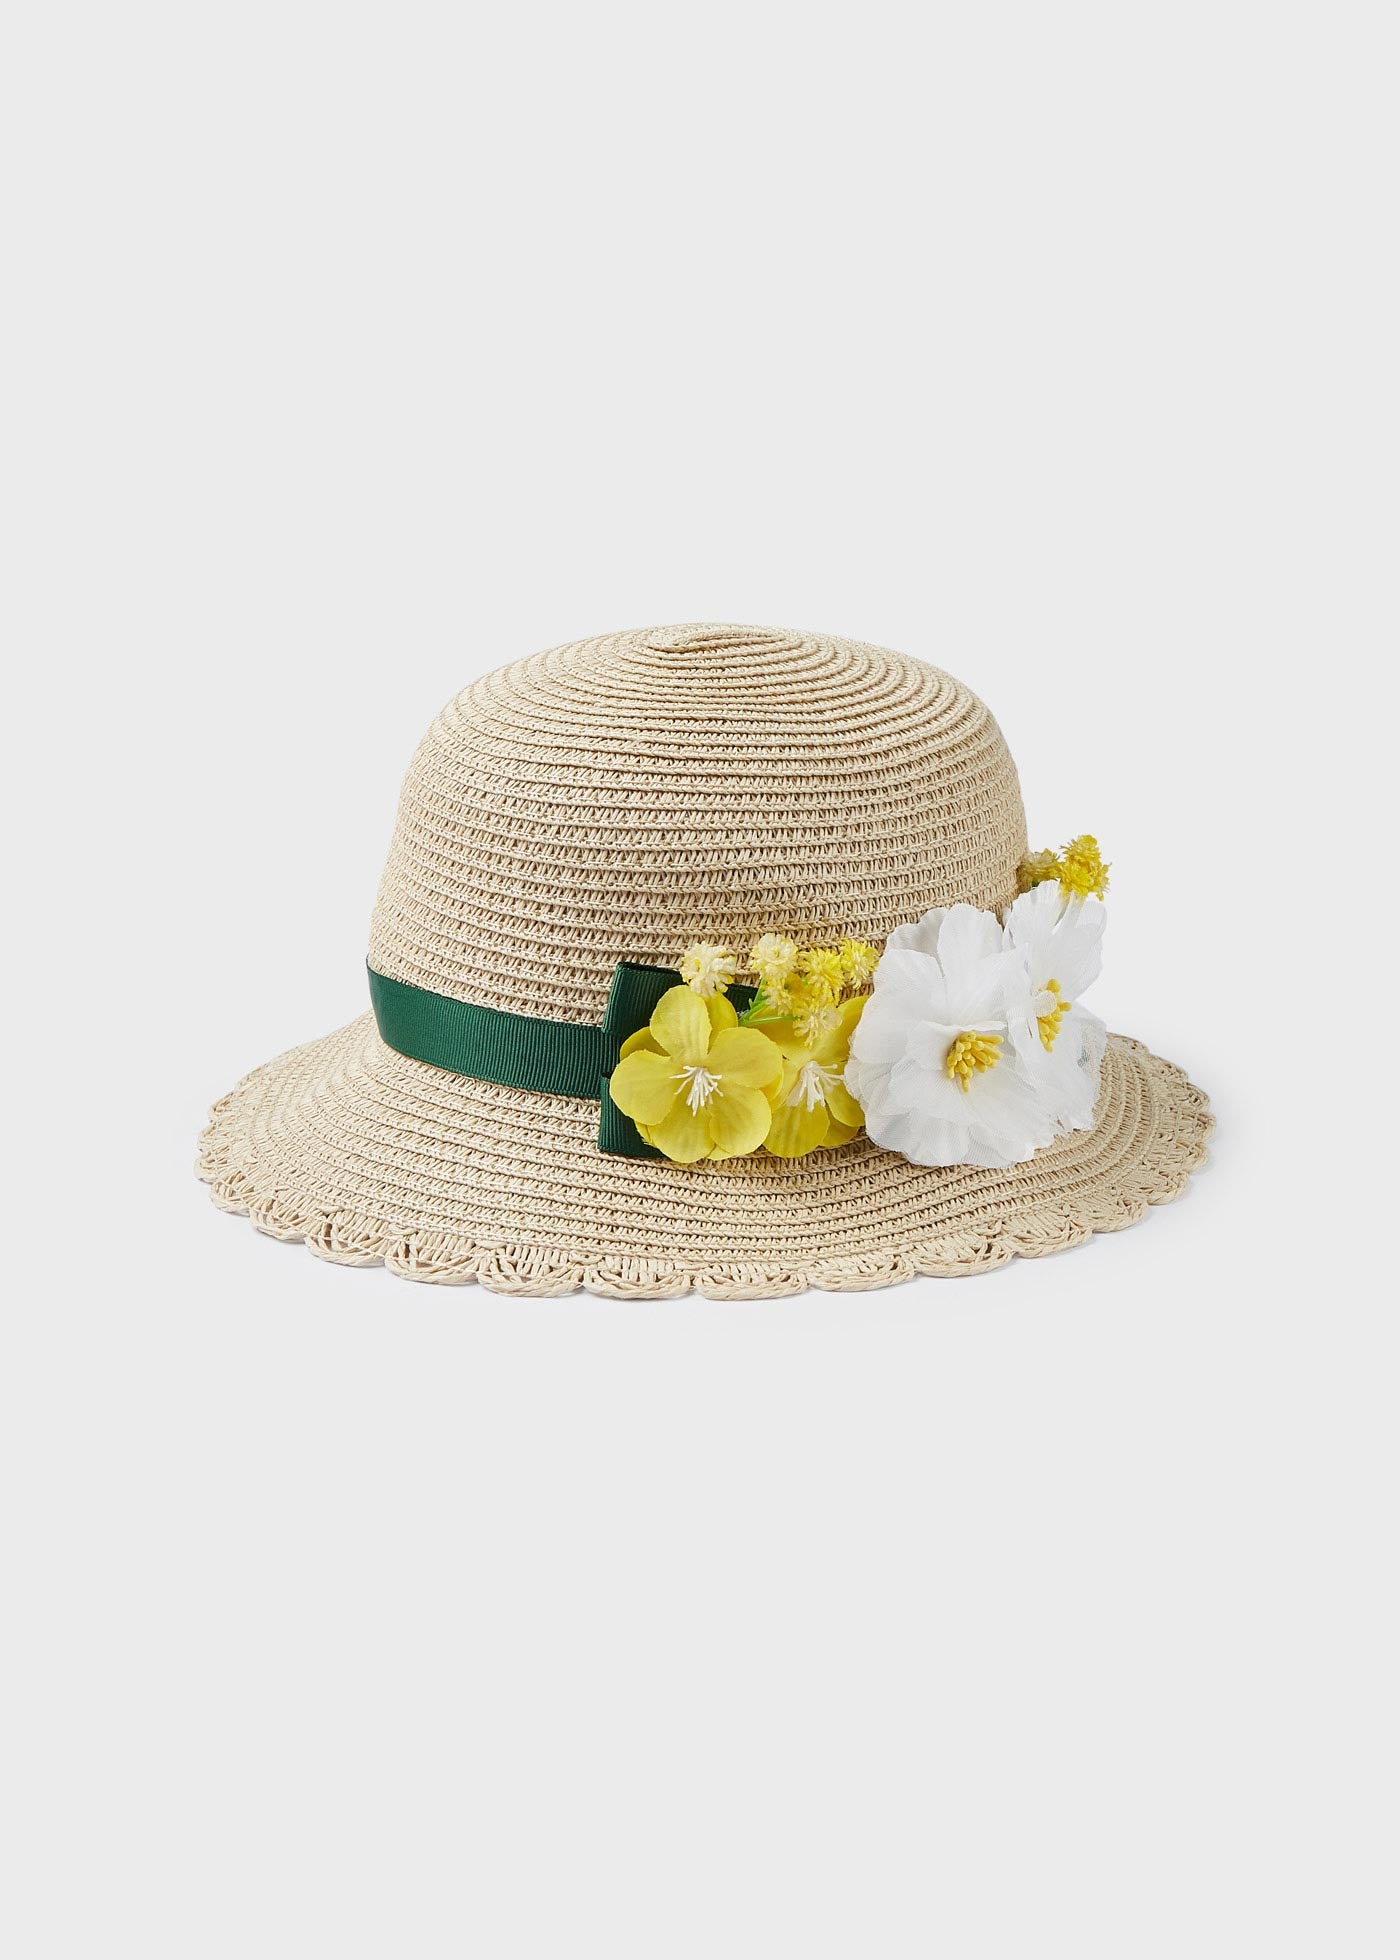 Mayoral Mini Straw Woven Hat w/Flowers _Beige 10499-062